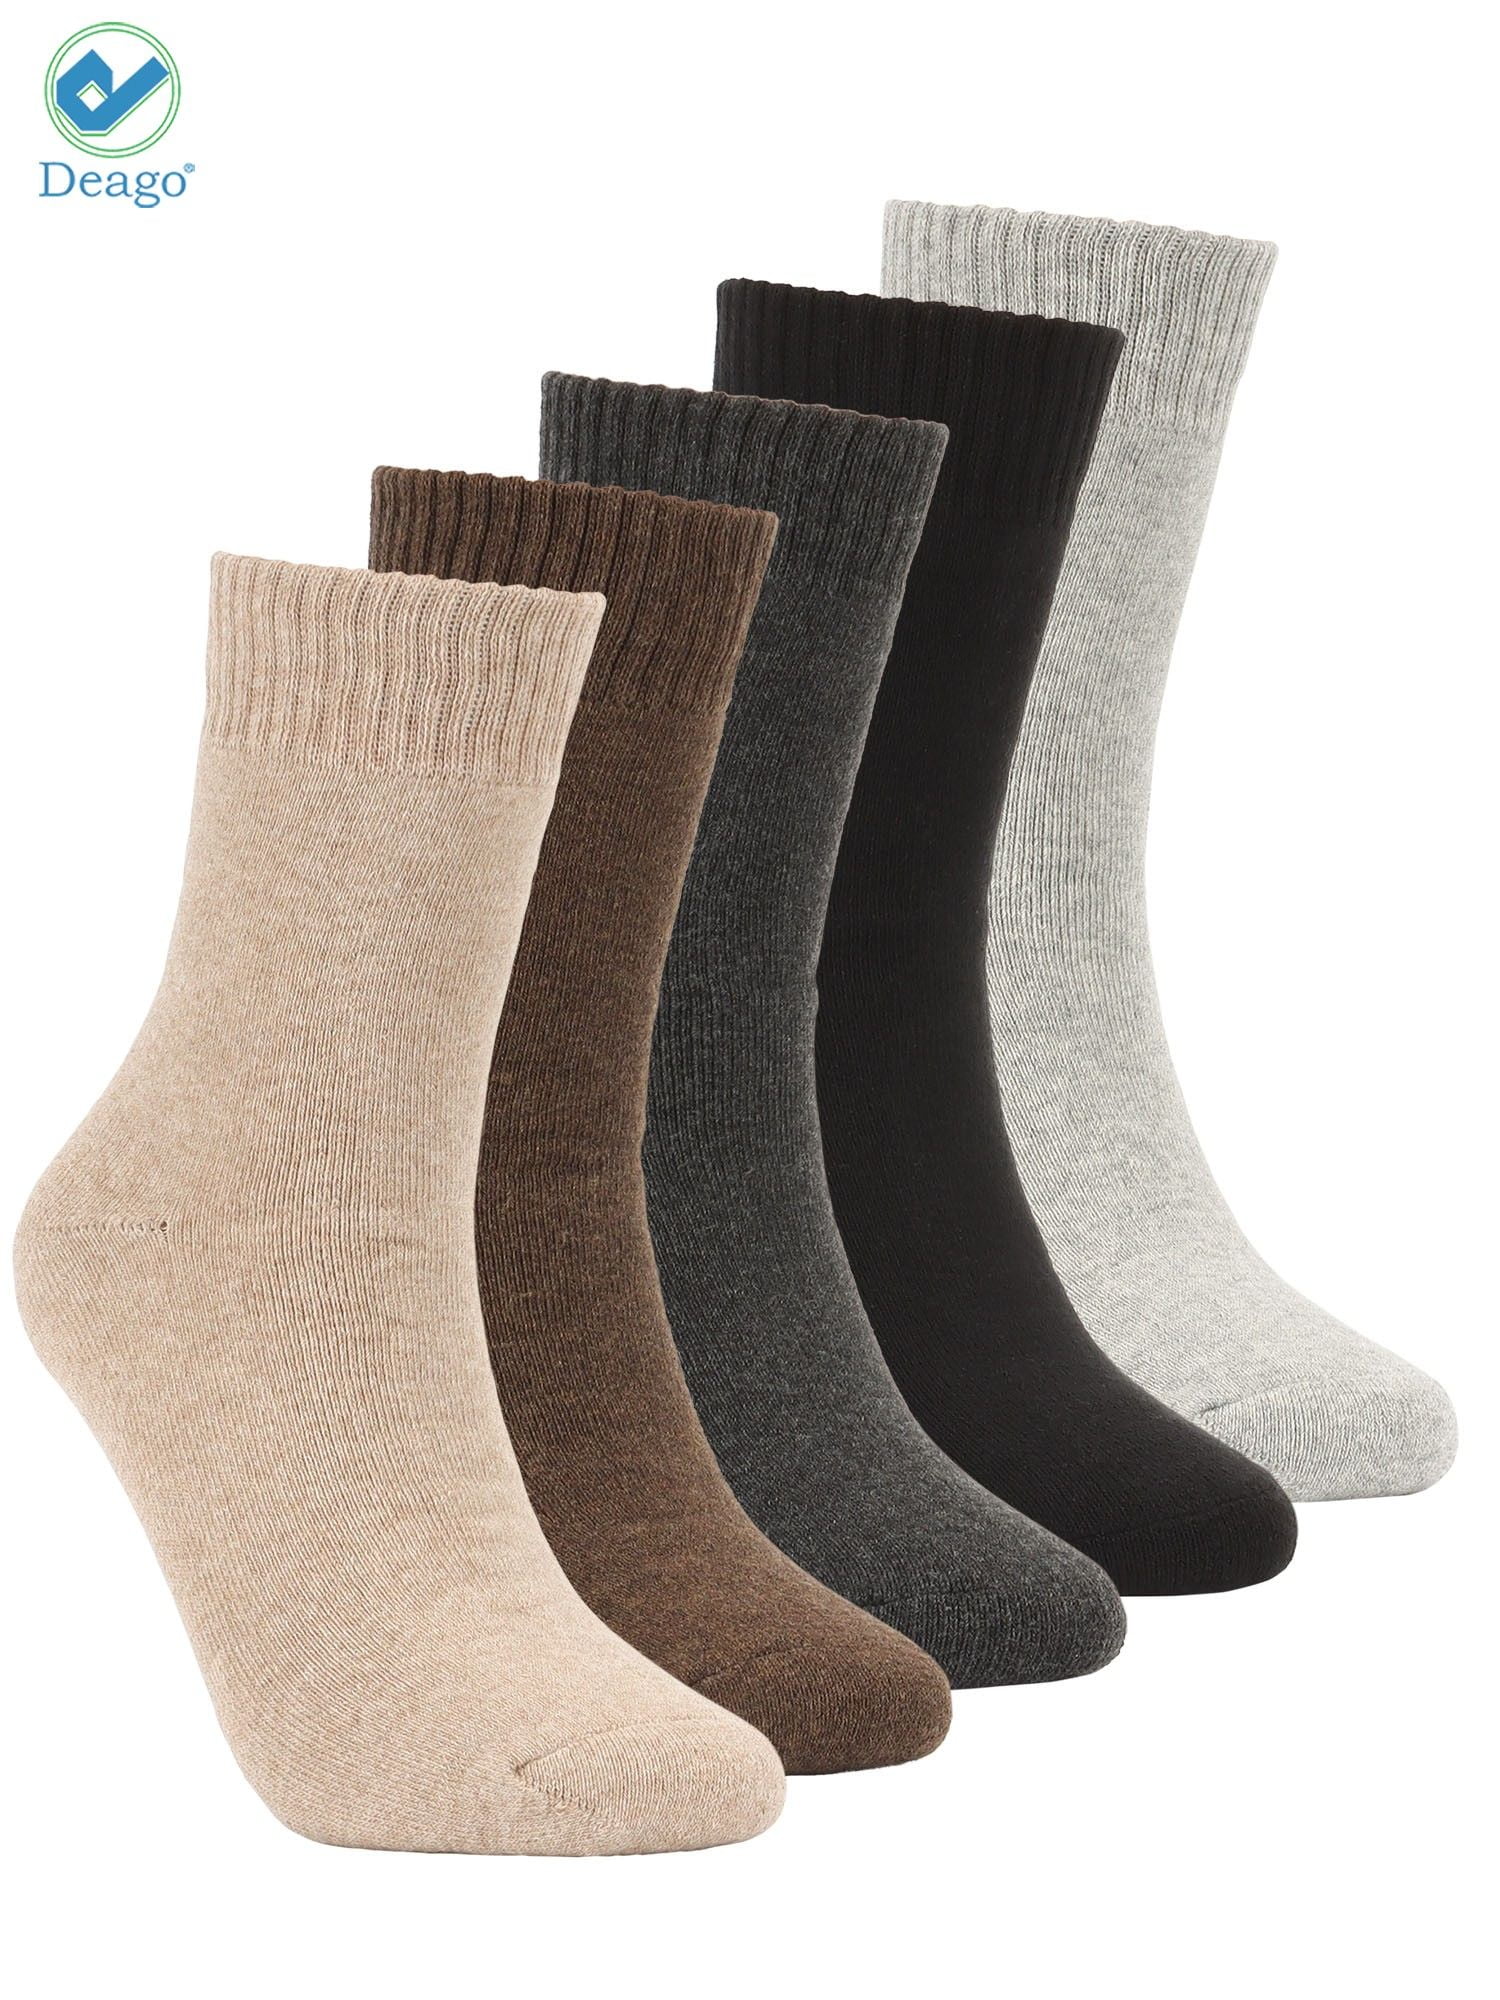 Mens Warm Wool Socks Thick Winter Comfort Thermal Crew Socks